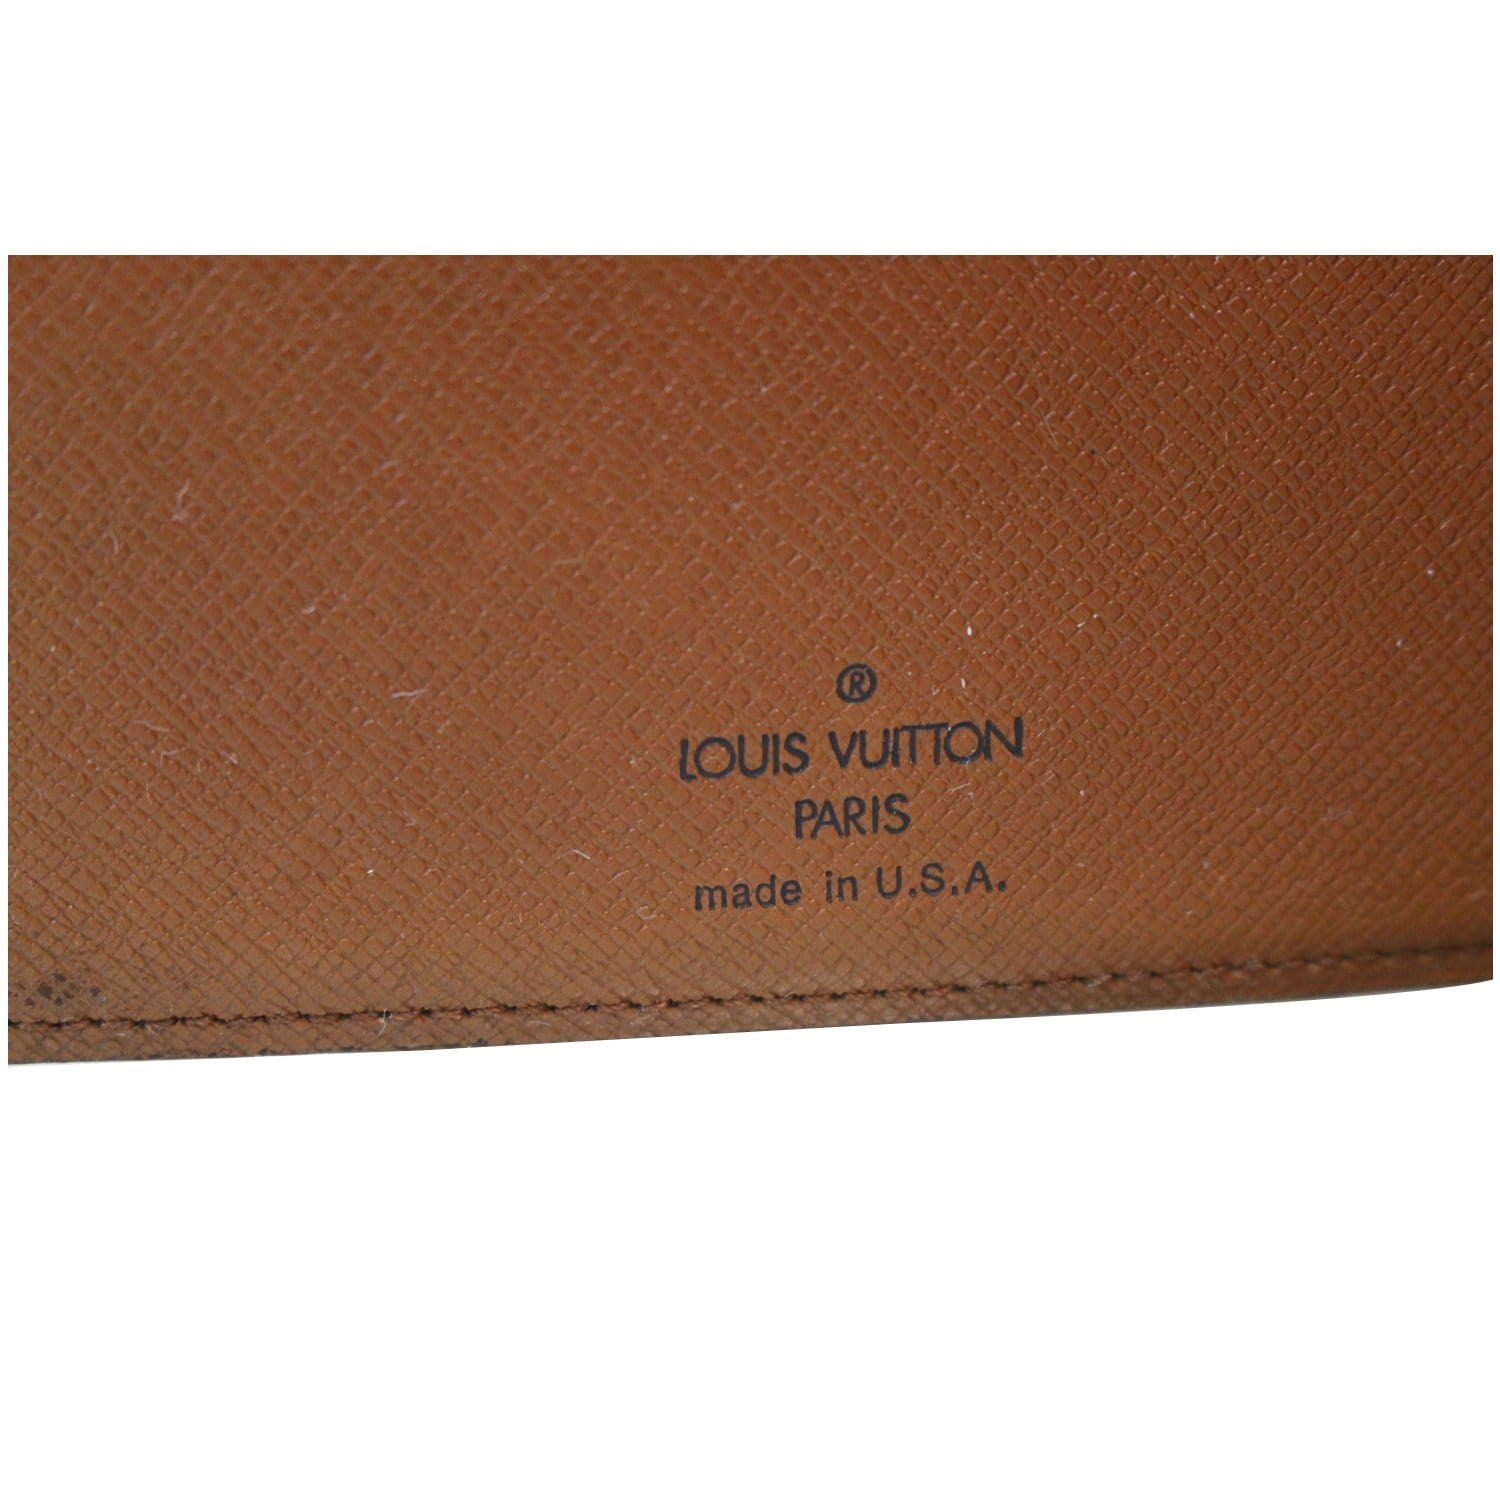 Louis Vuitton Monogram Desk Agenda Cover - Brown Books, Stationery